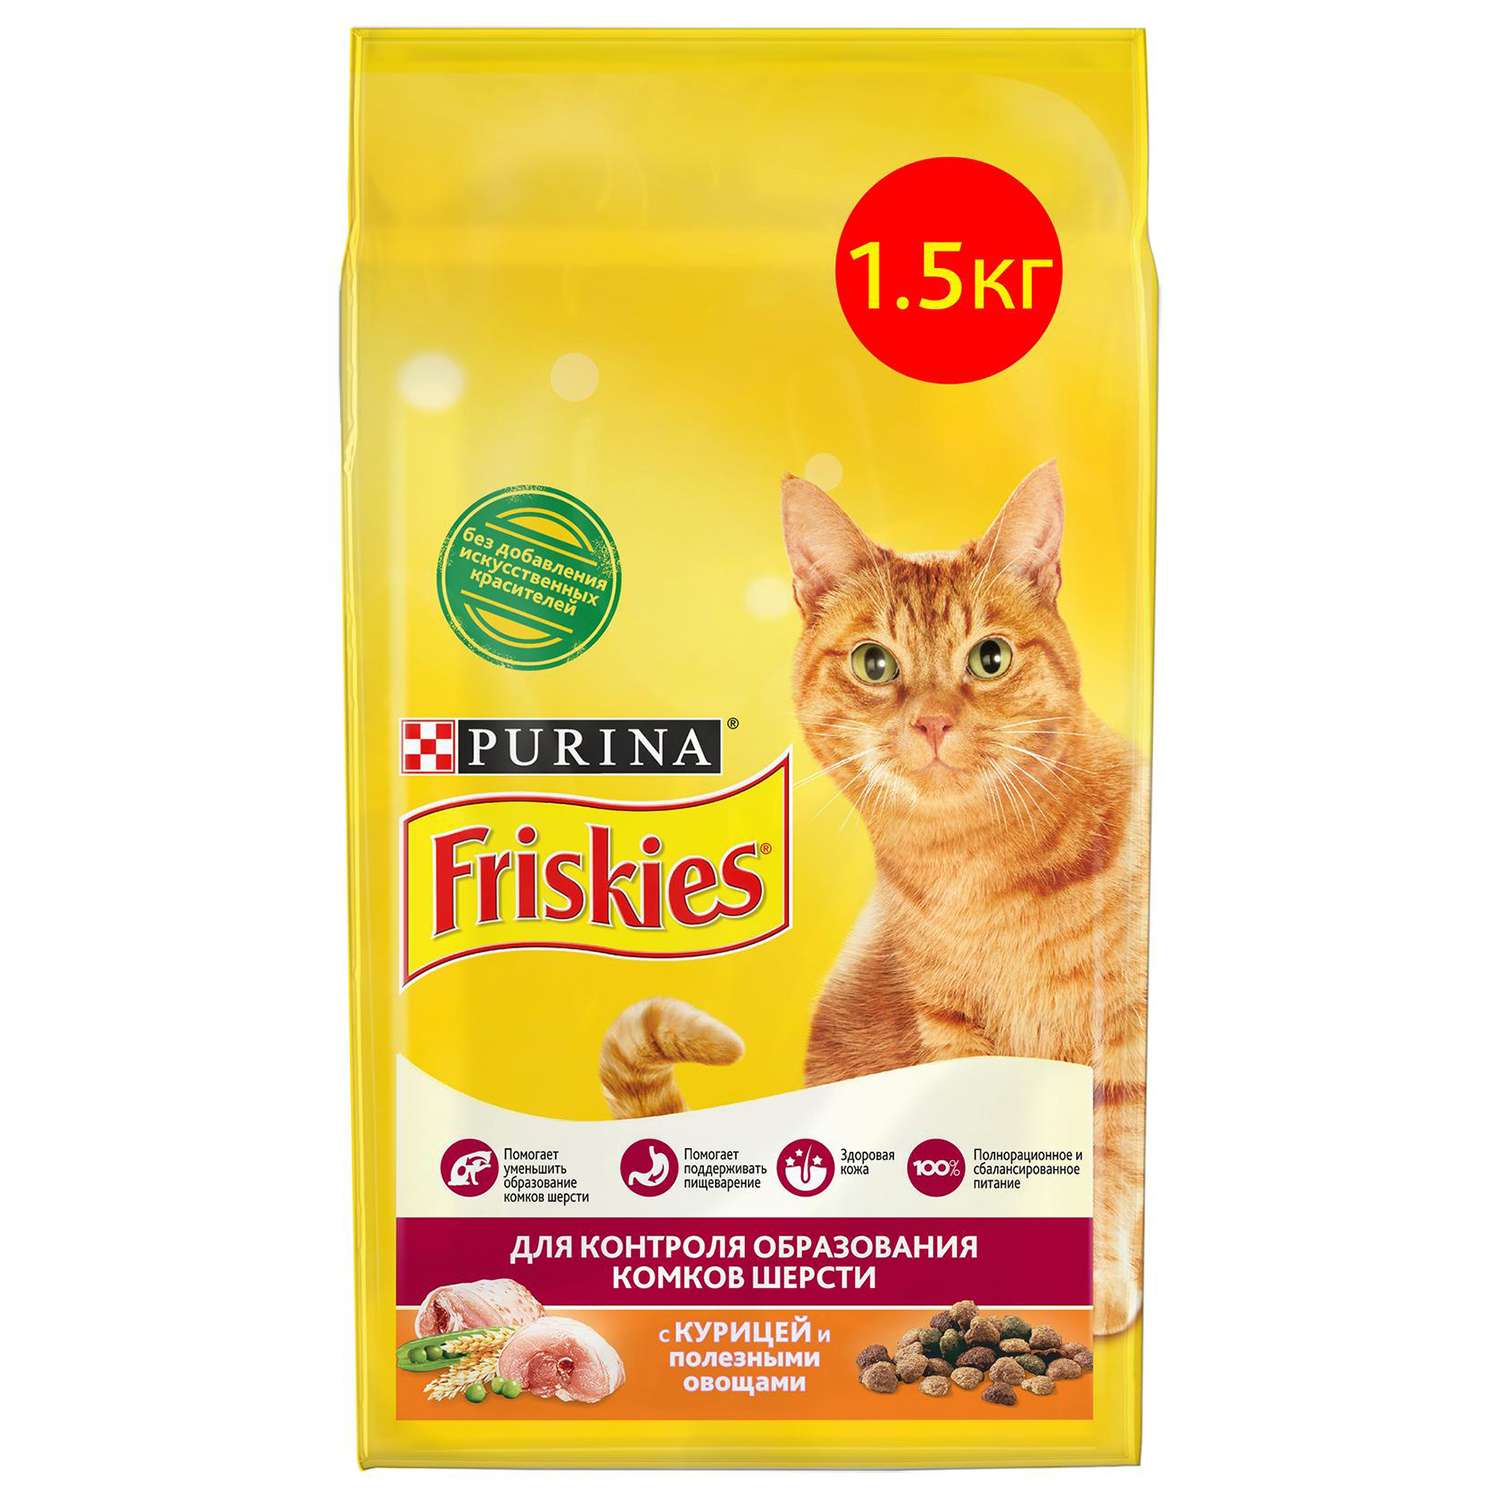 Корм сухой для кошек Friskies 1.5кг курица-овощи для контроля образования комков шерсти - фото 1